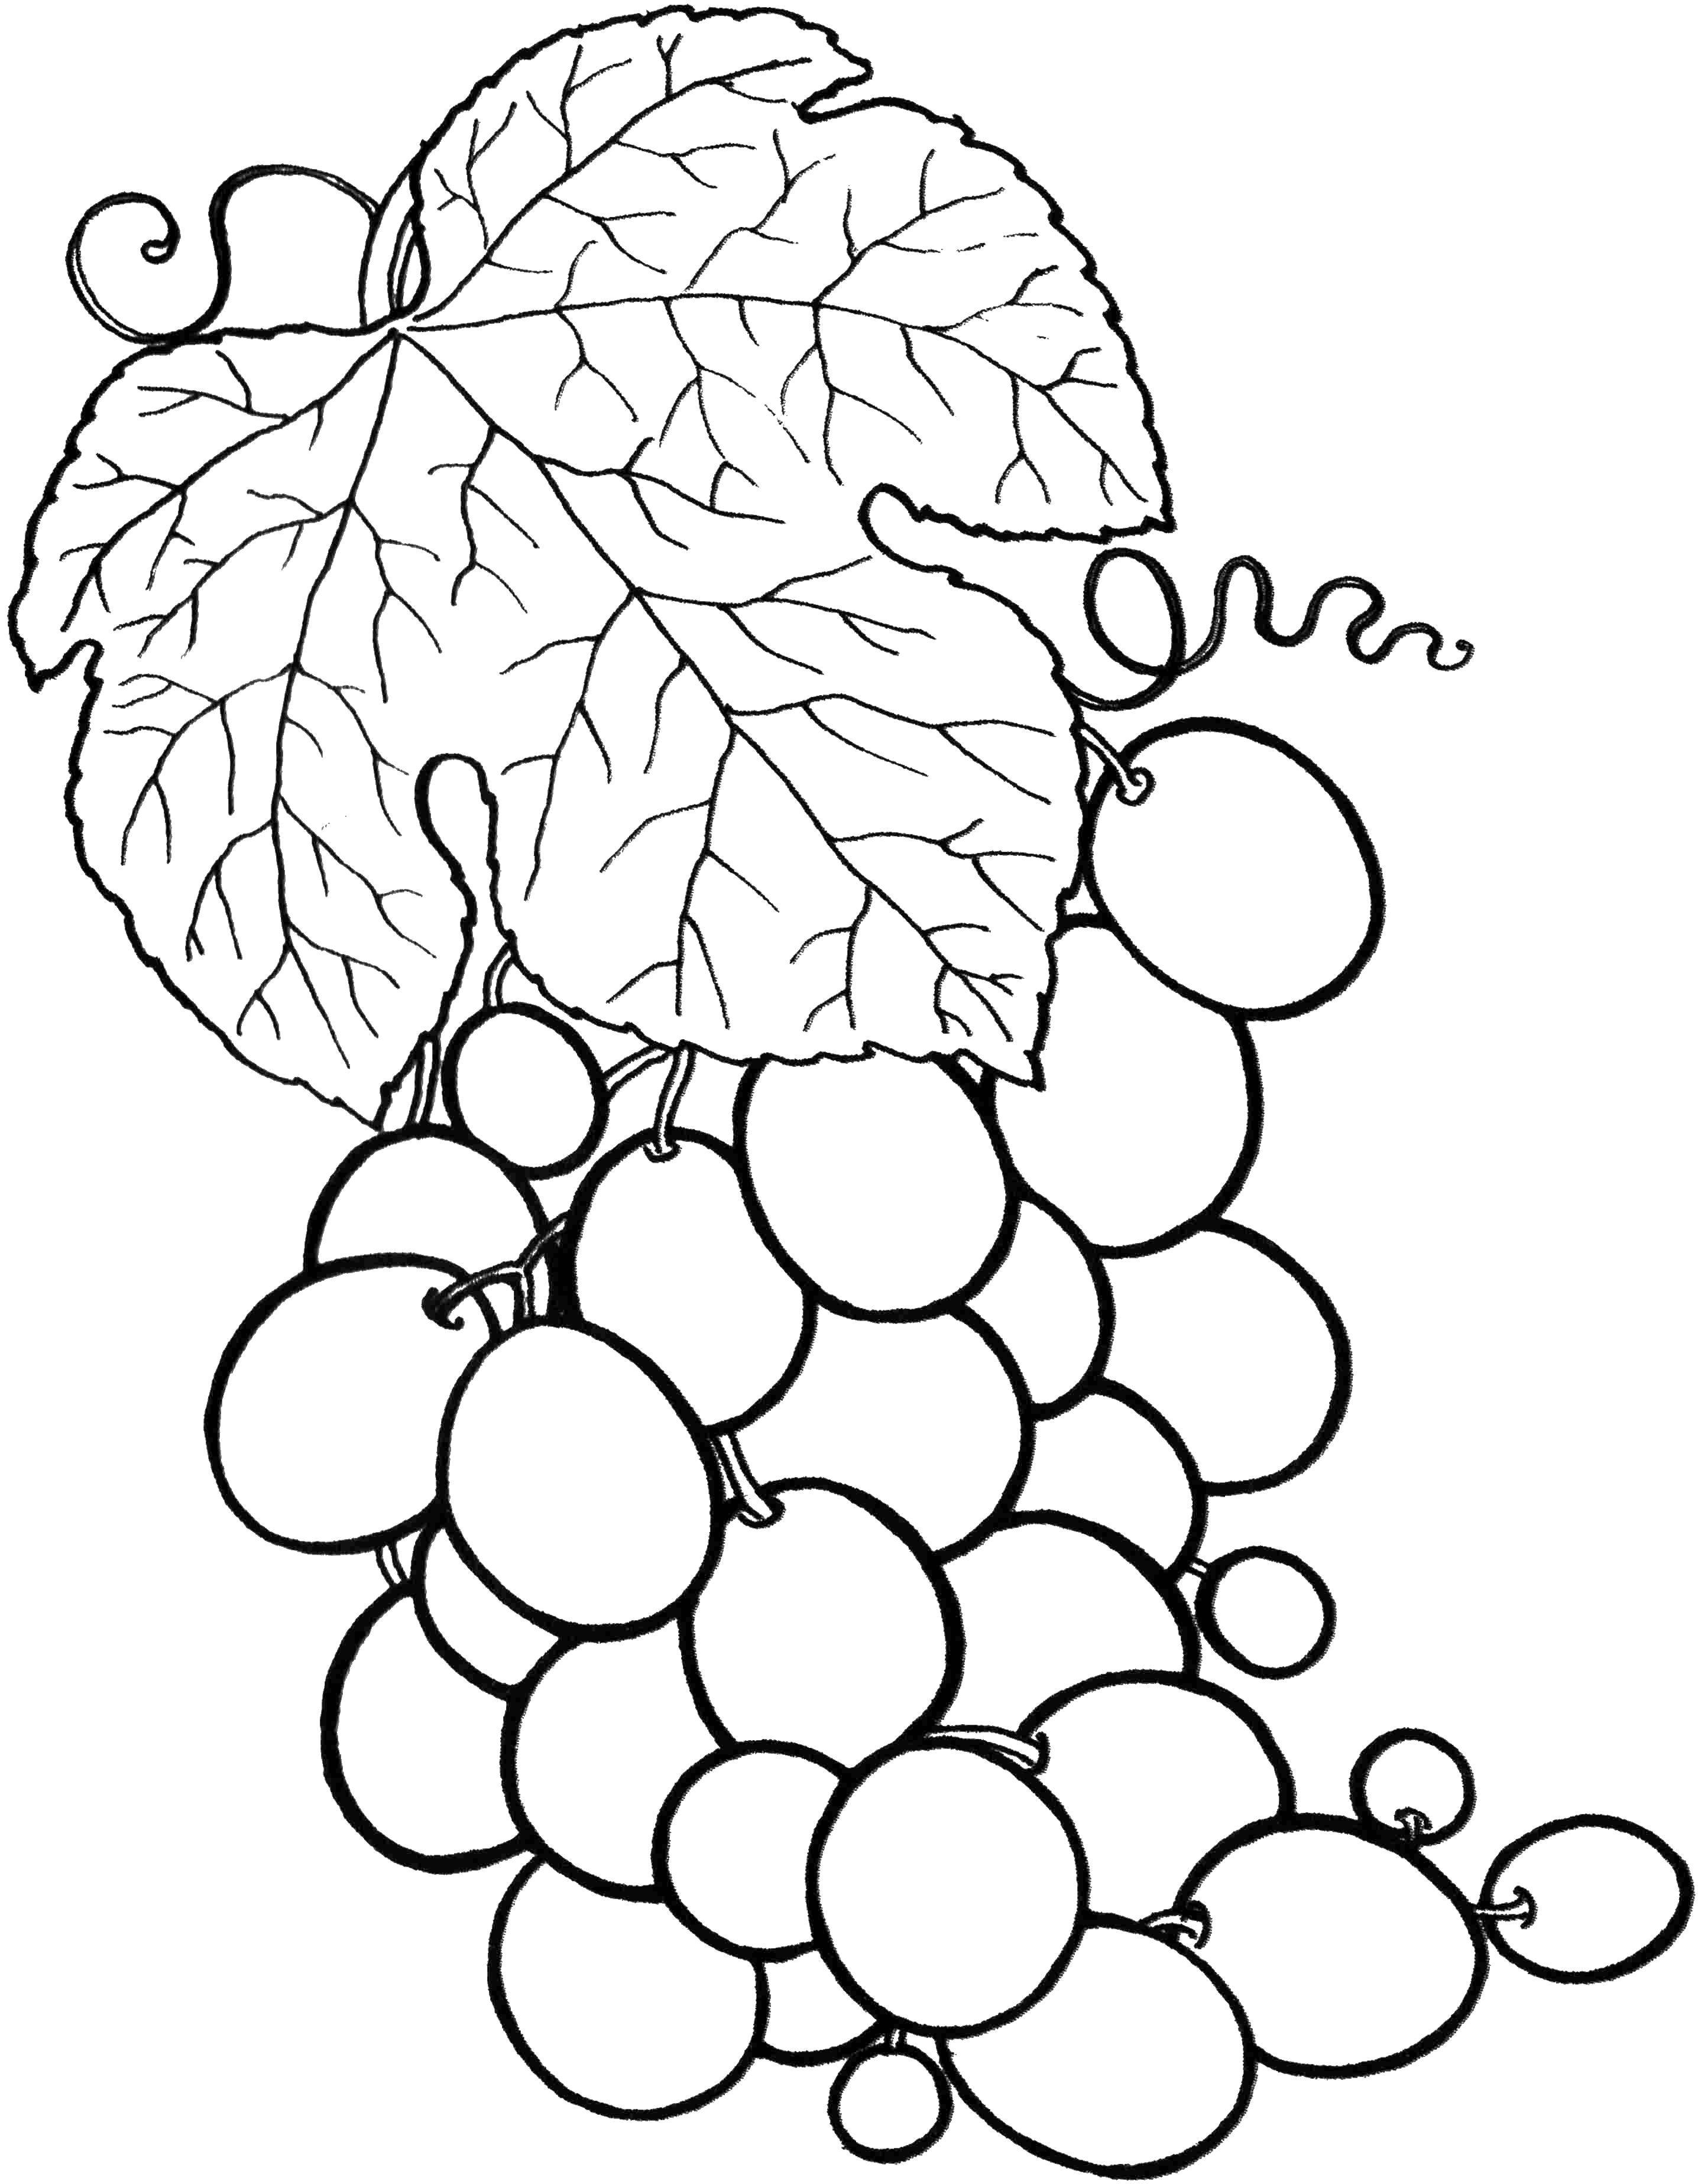 Coloring Grapes. Category fruits. Tags:  grapes.